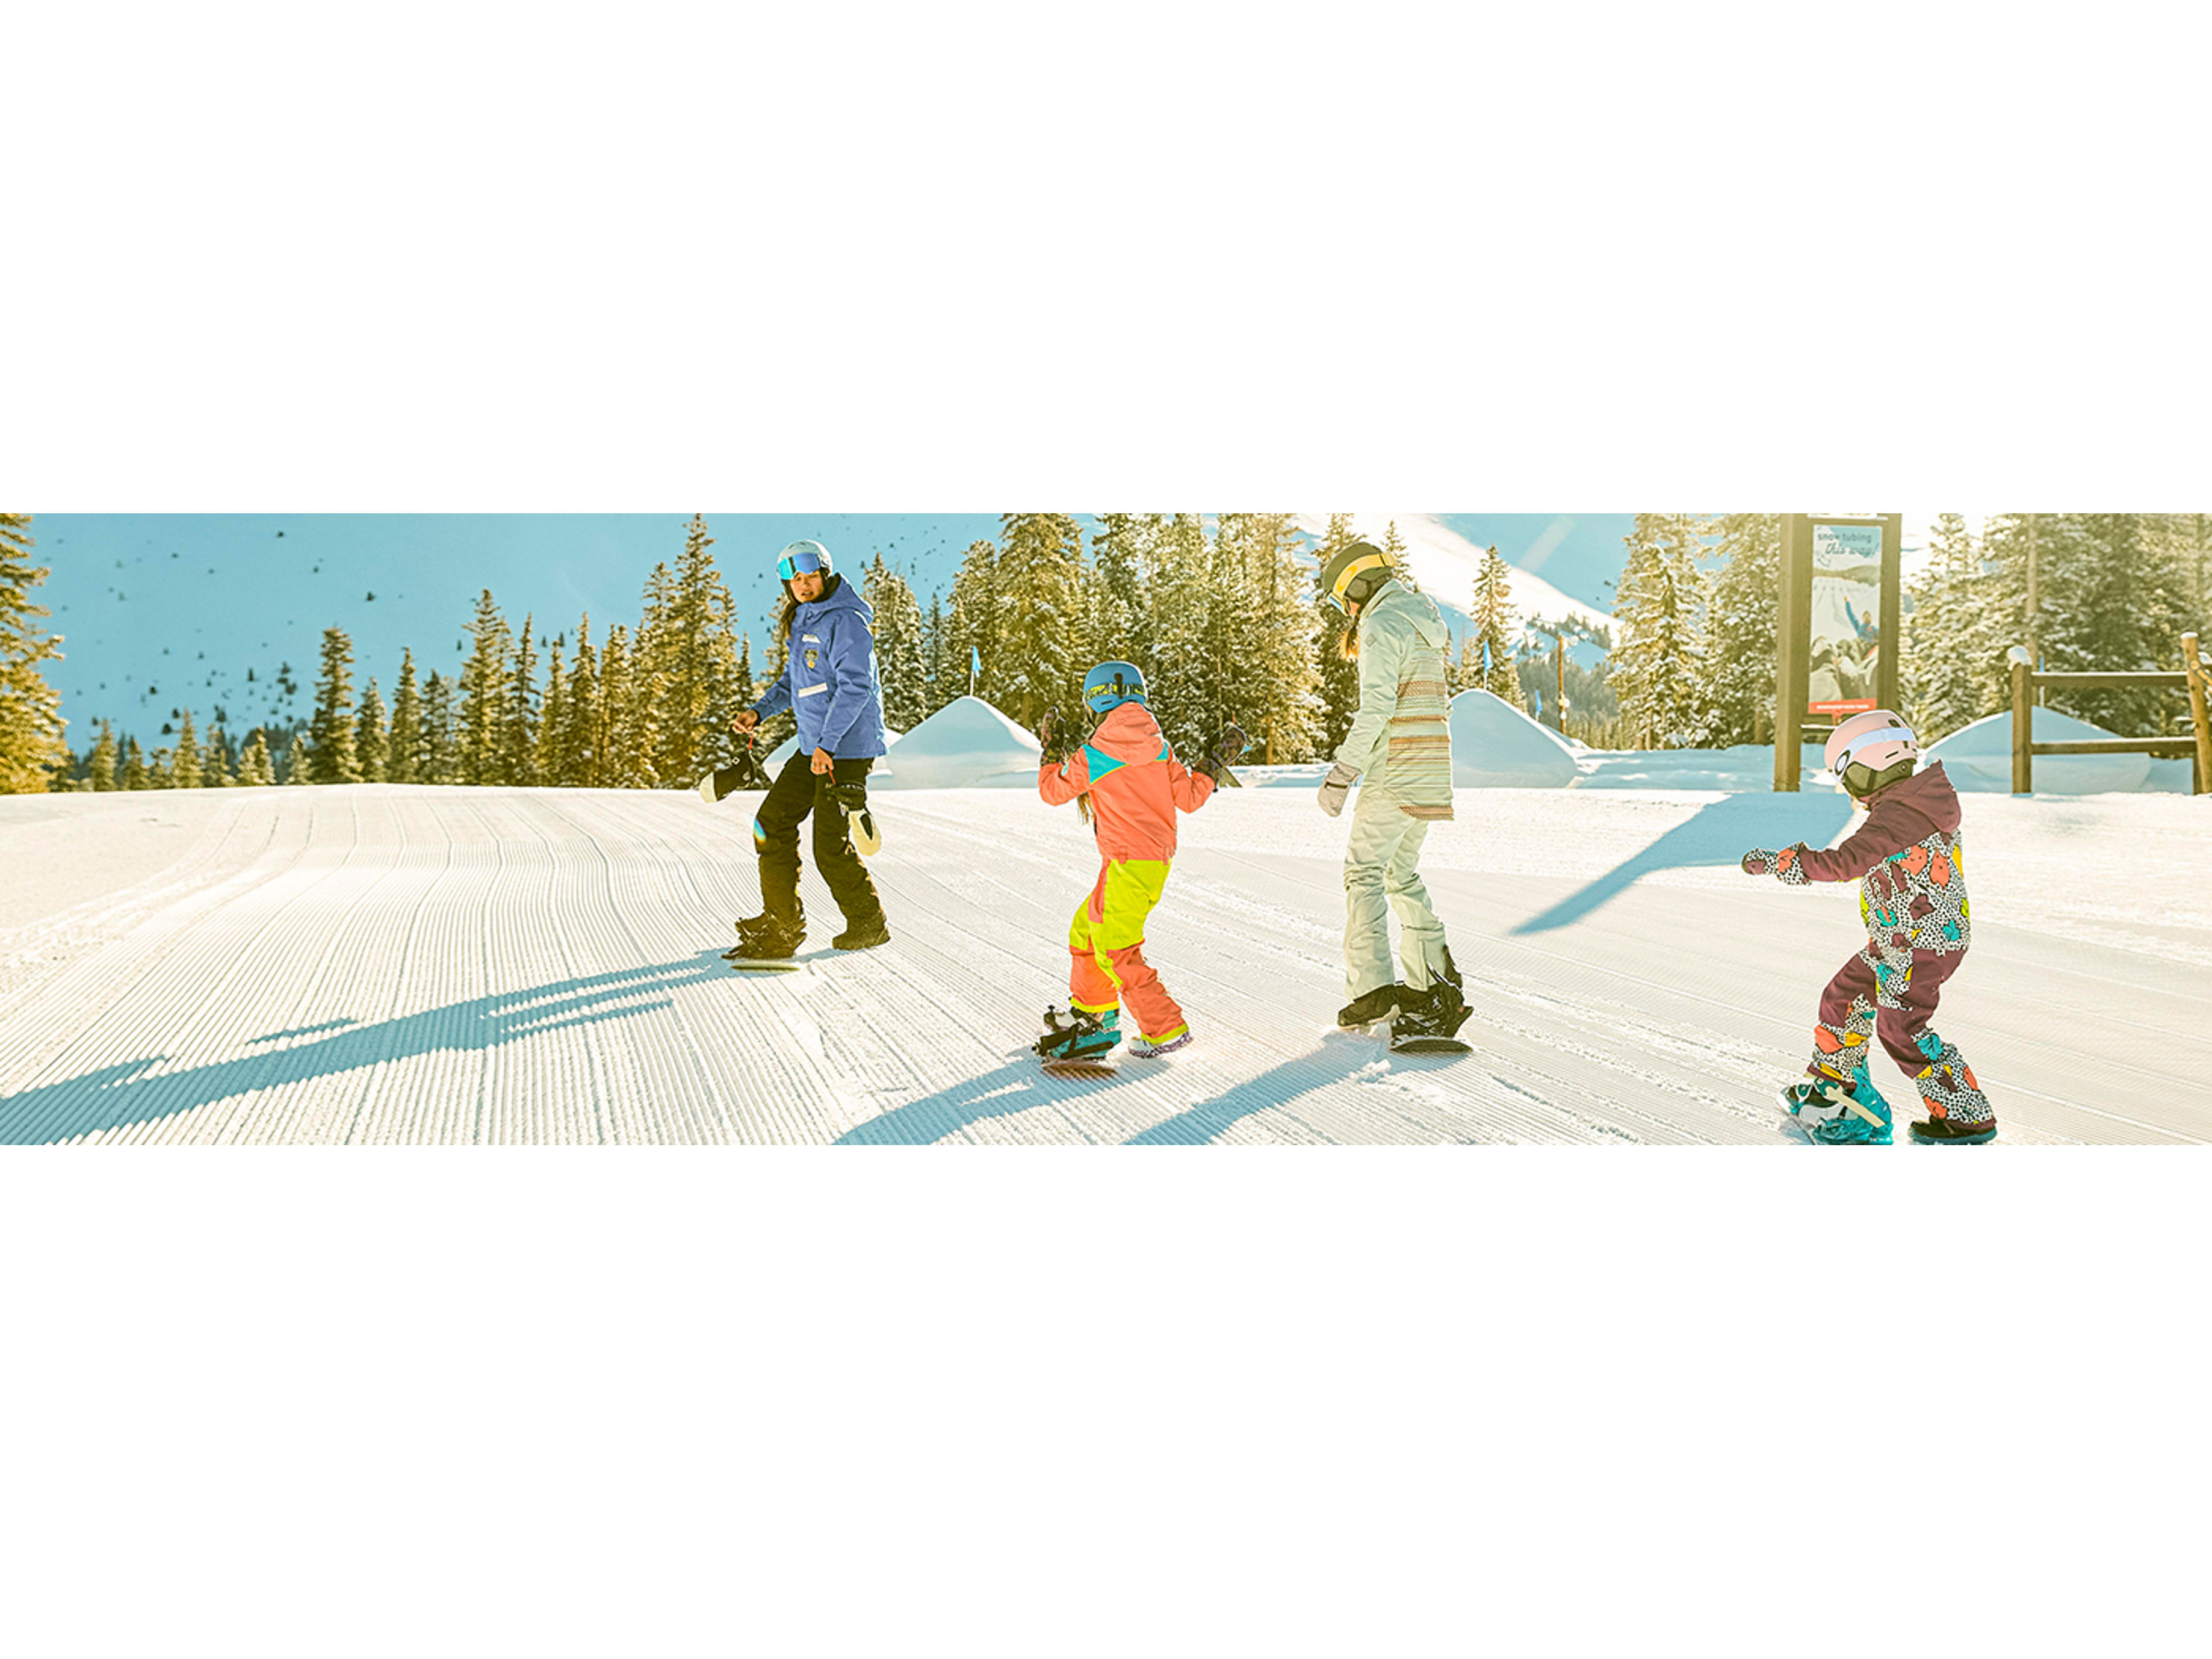 College Ski, Snowboard & Ski Trips